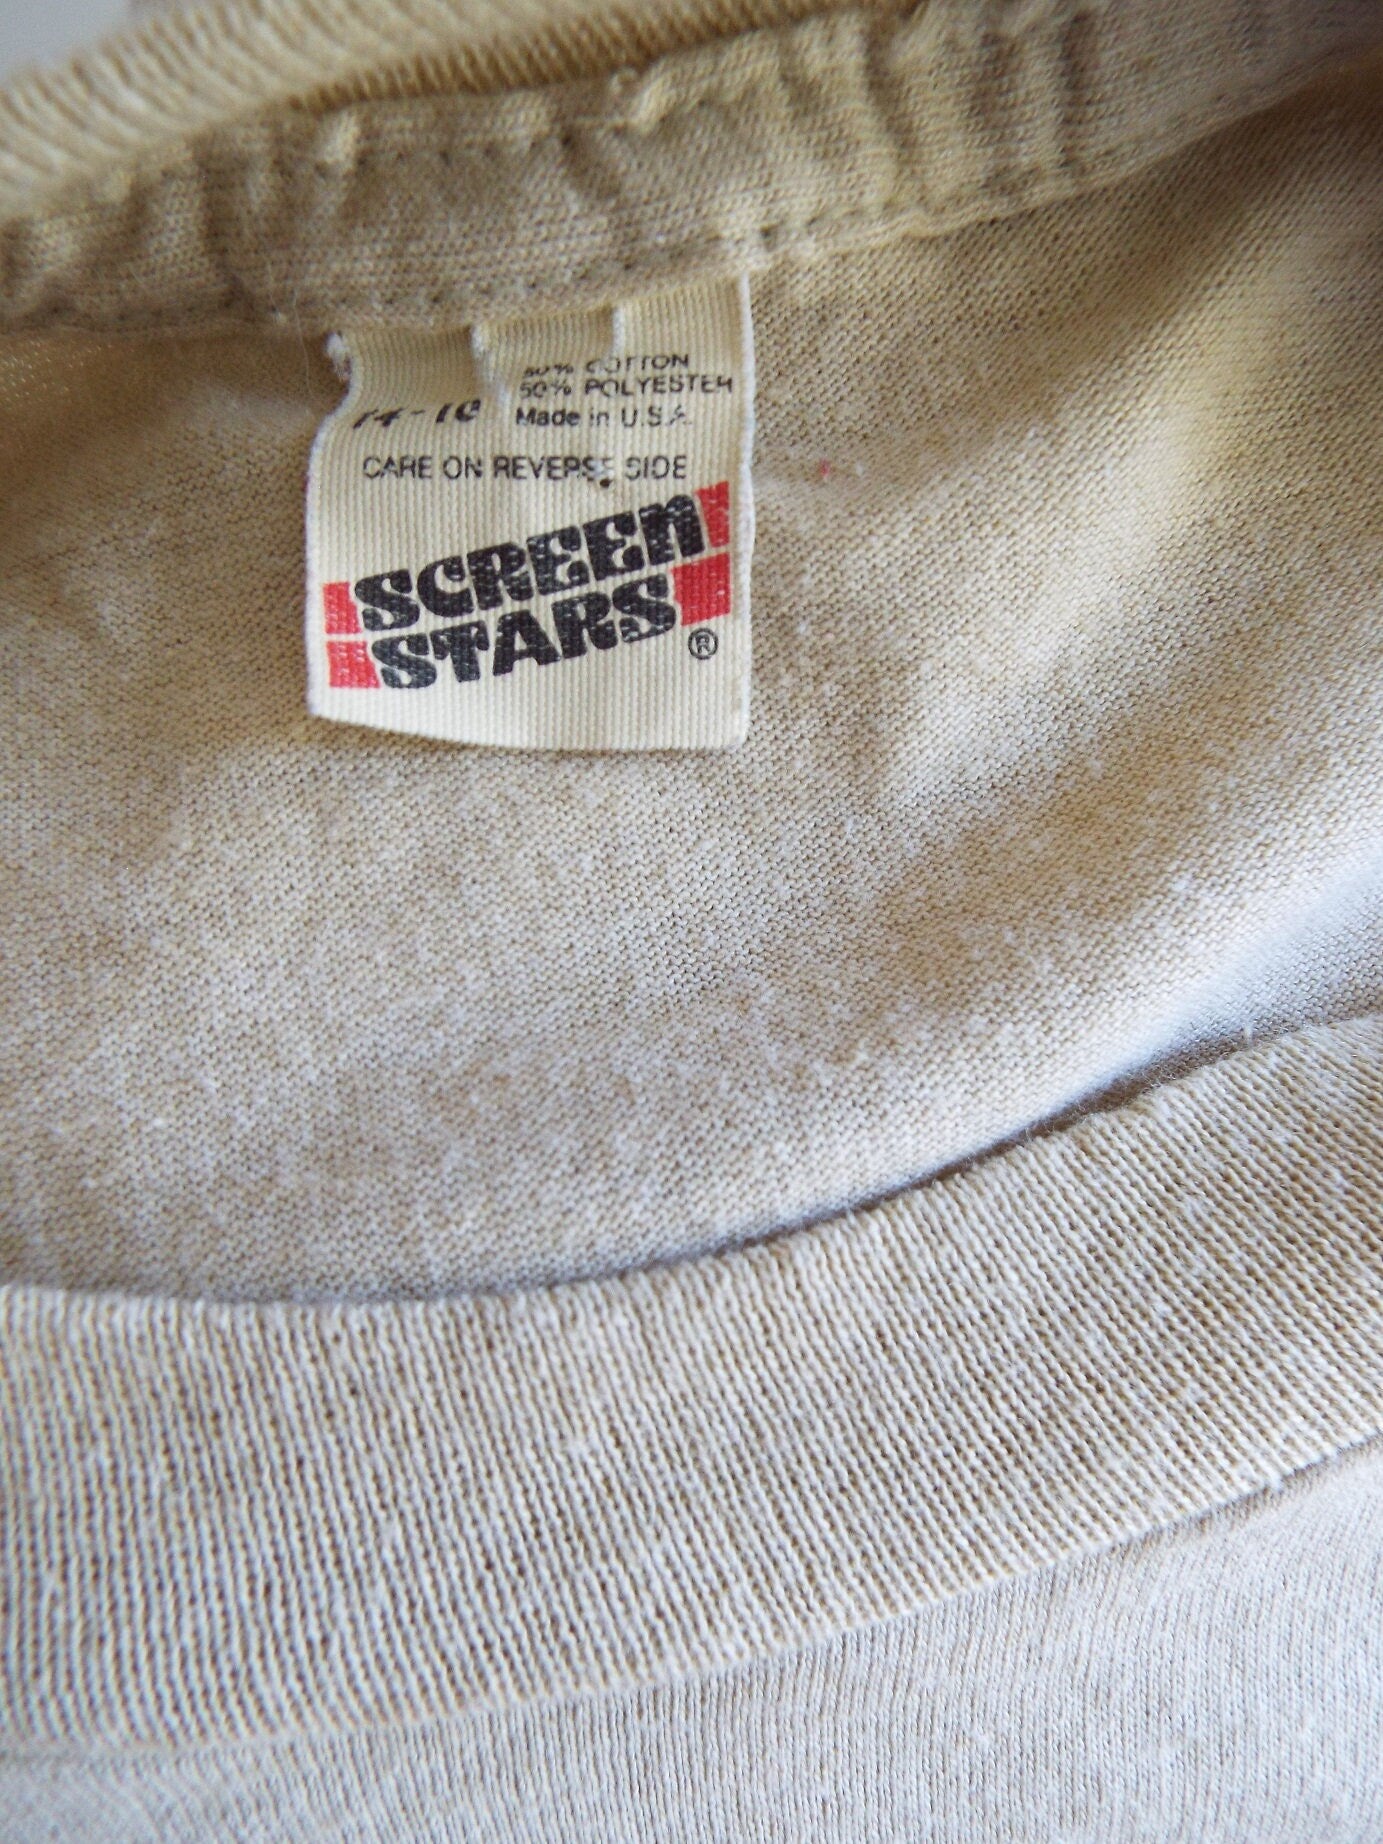 Vintage Short Sleeve Operation Desert Storm Child's T-Shirt by Screen Stars